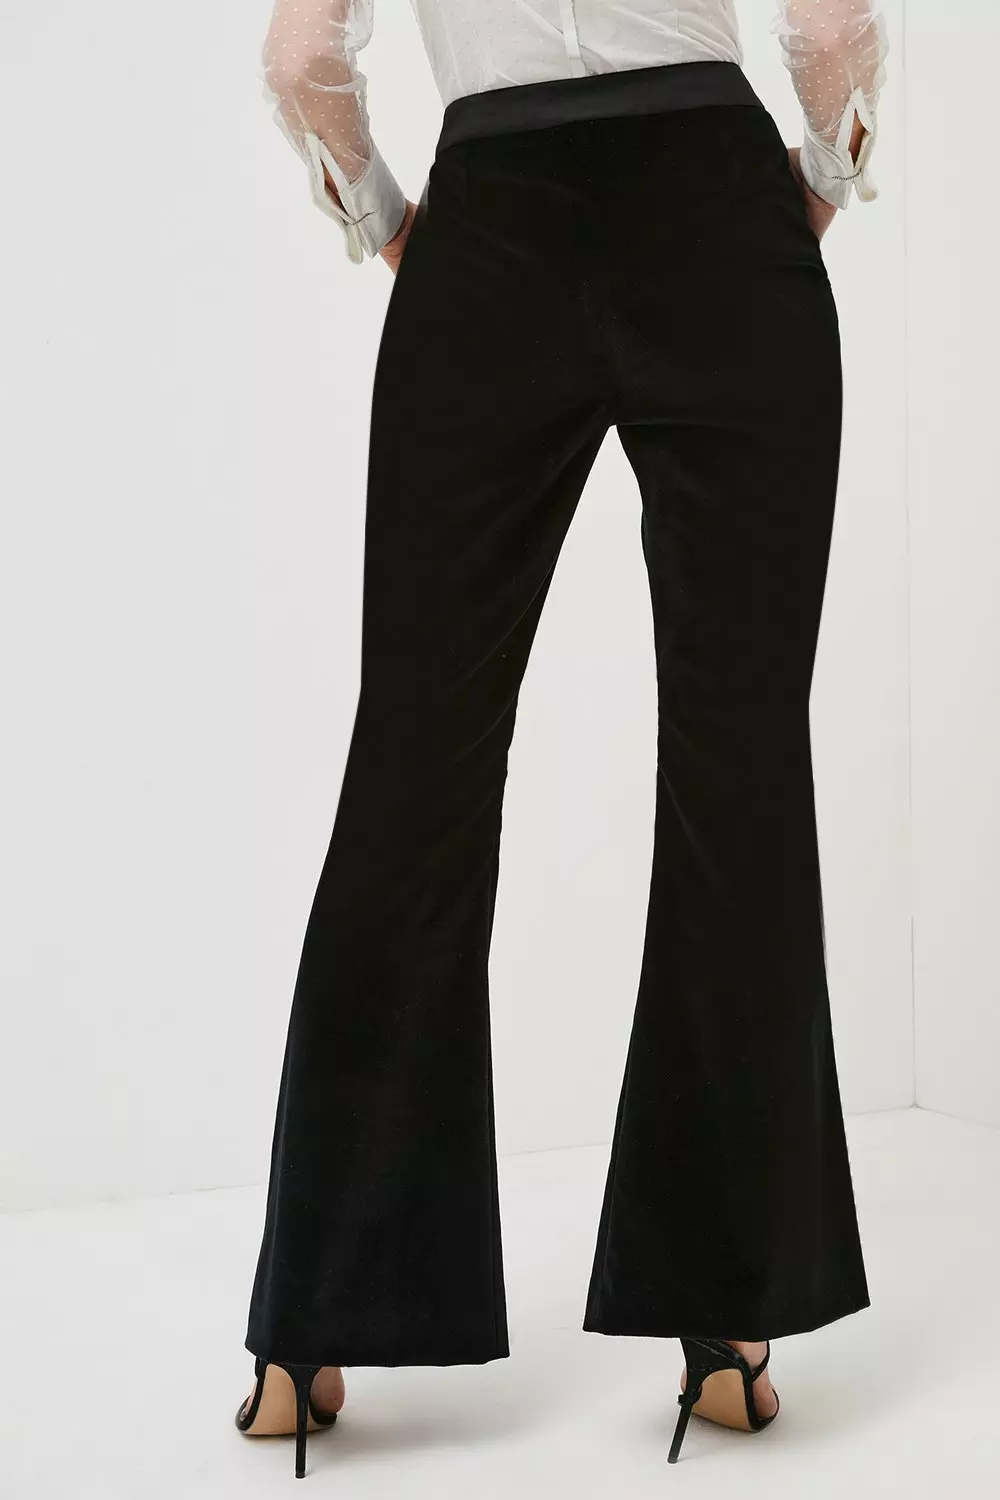 ASYOU velvet flare pants in black